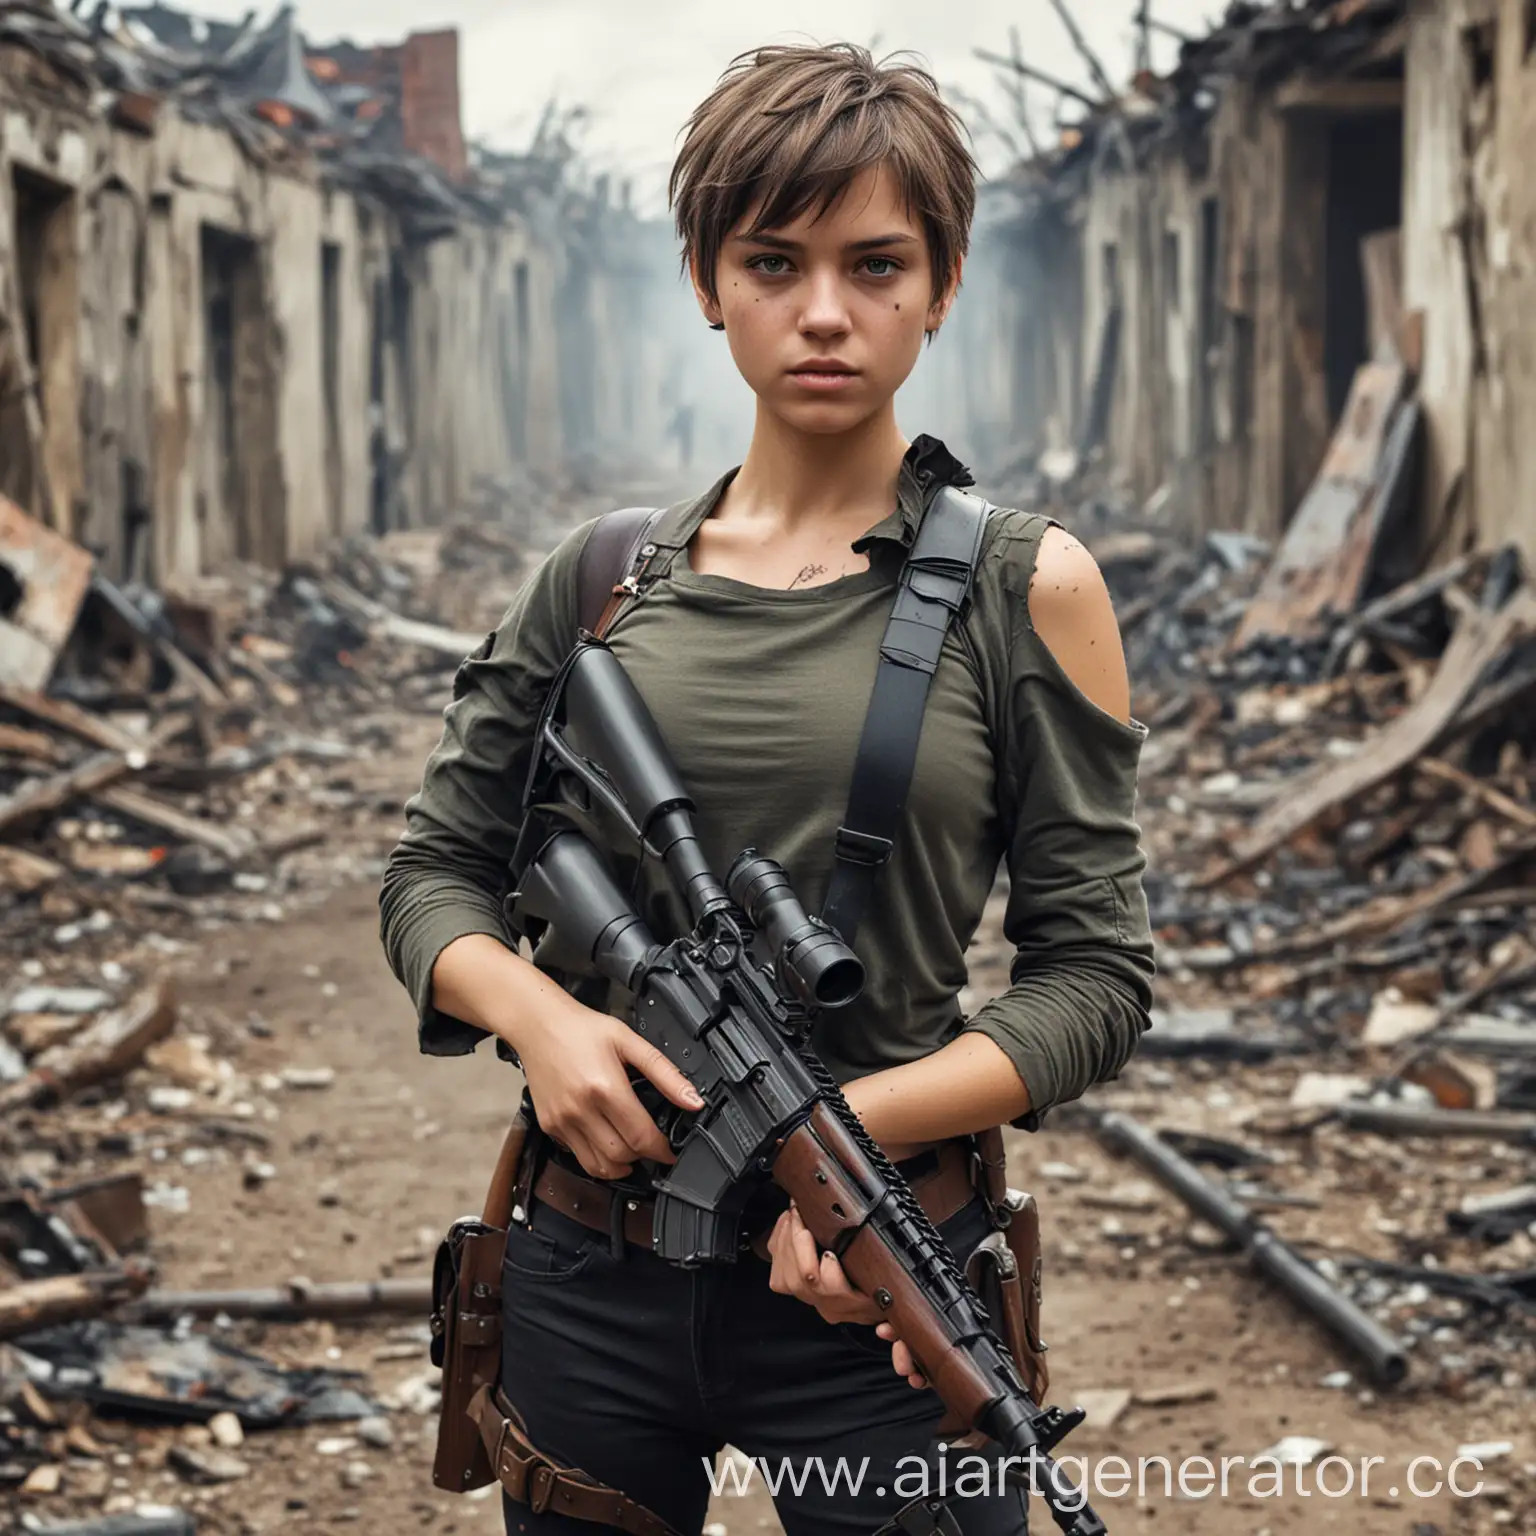 Девушка с короткими волосами, с винтовкой на плече, на бедрах два пистолета, вокруг разруха